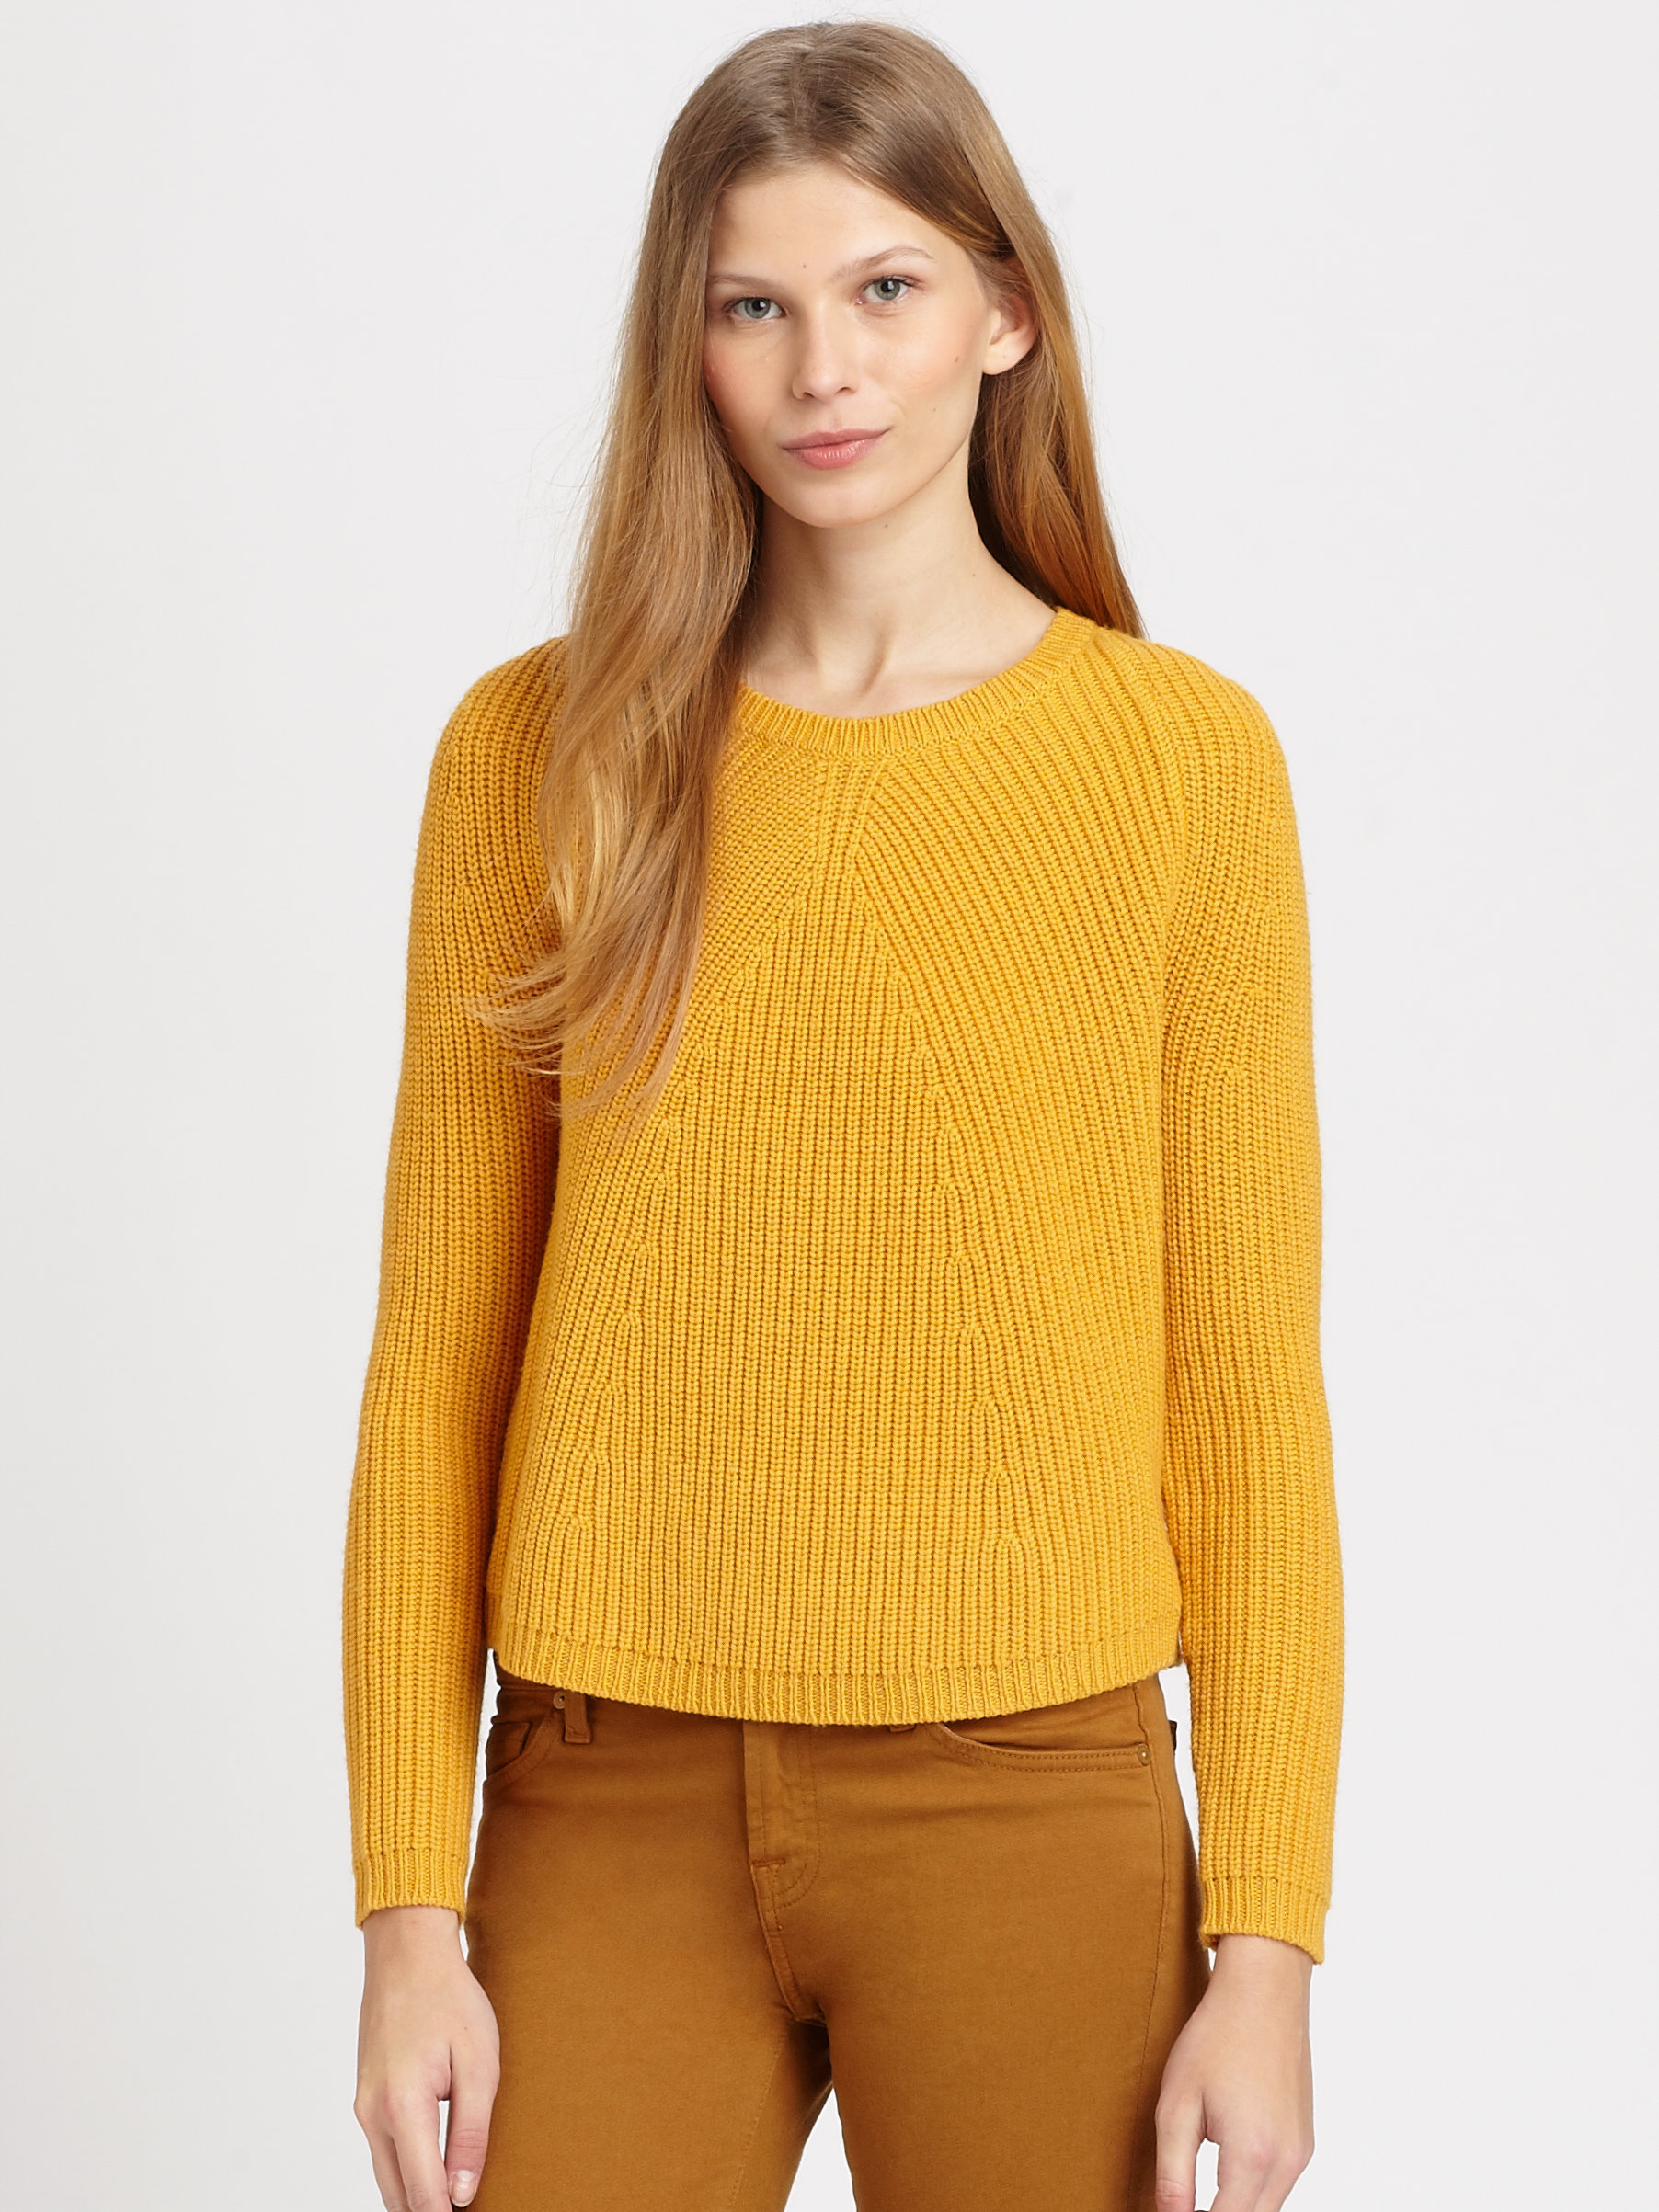 Lyst - Theory Jaydee Wool Sweater in Yellow